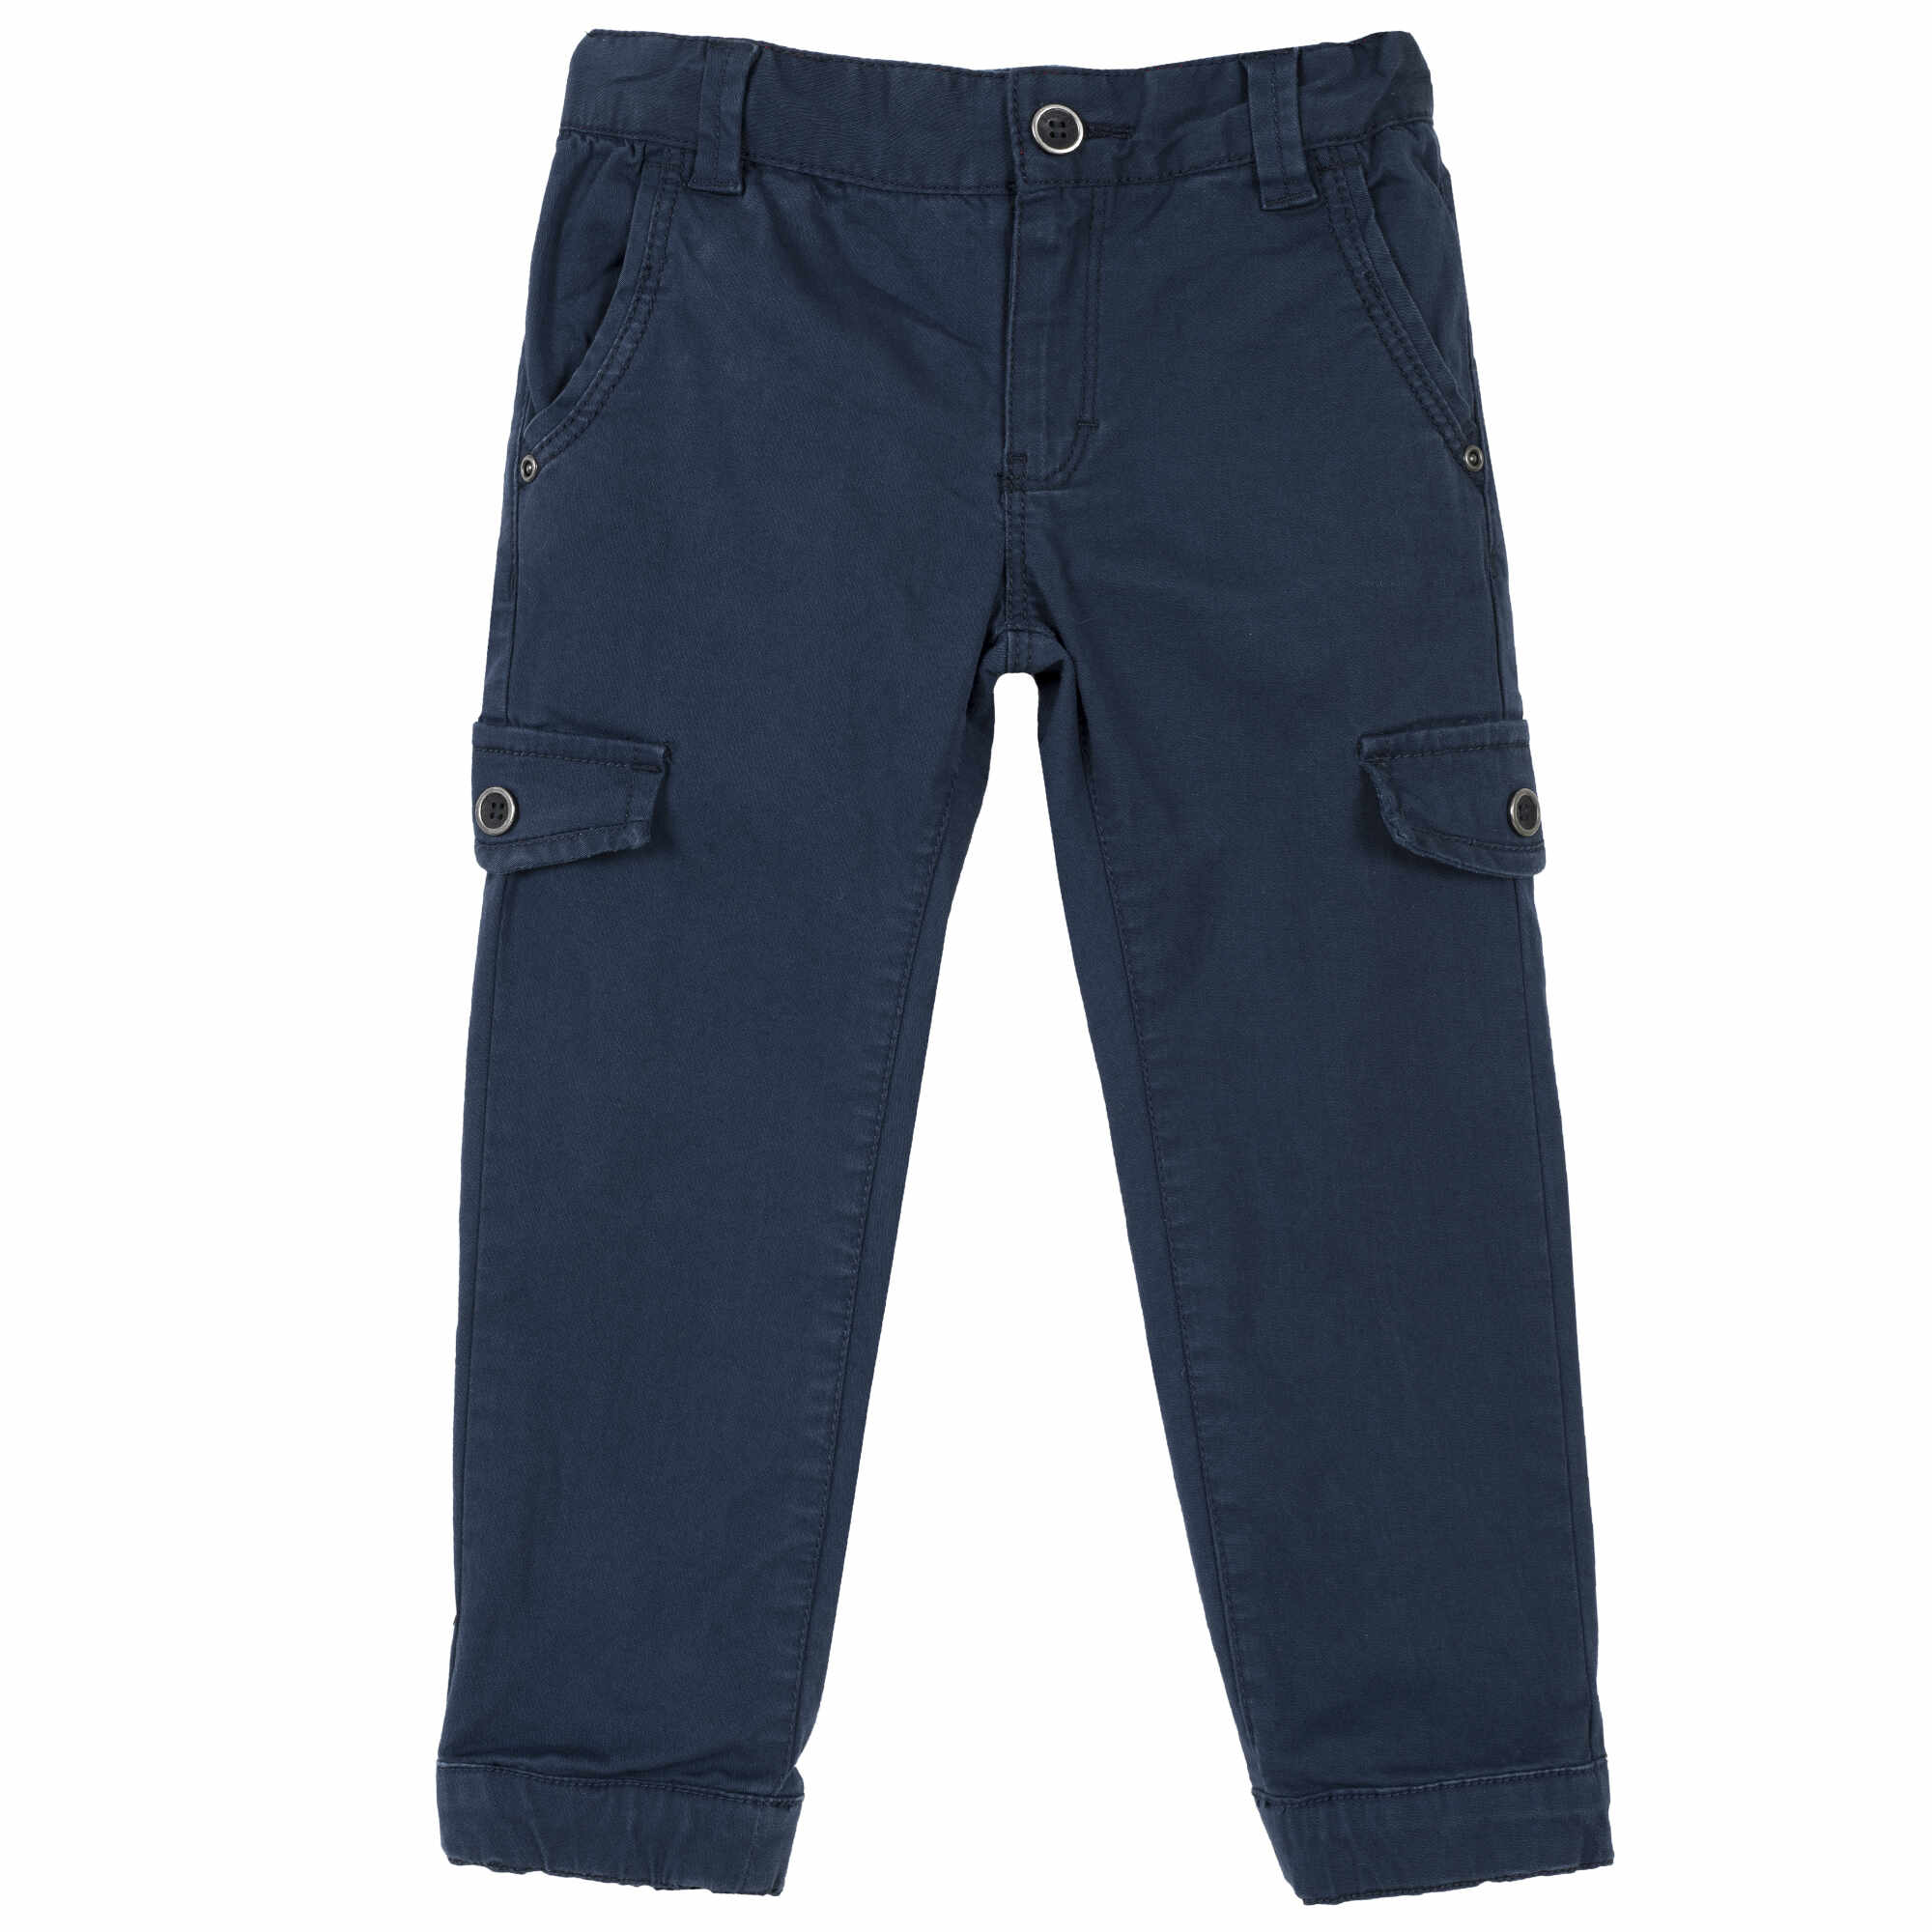 Pantalon lung copii Chicco, albastru inchis, 24956